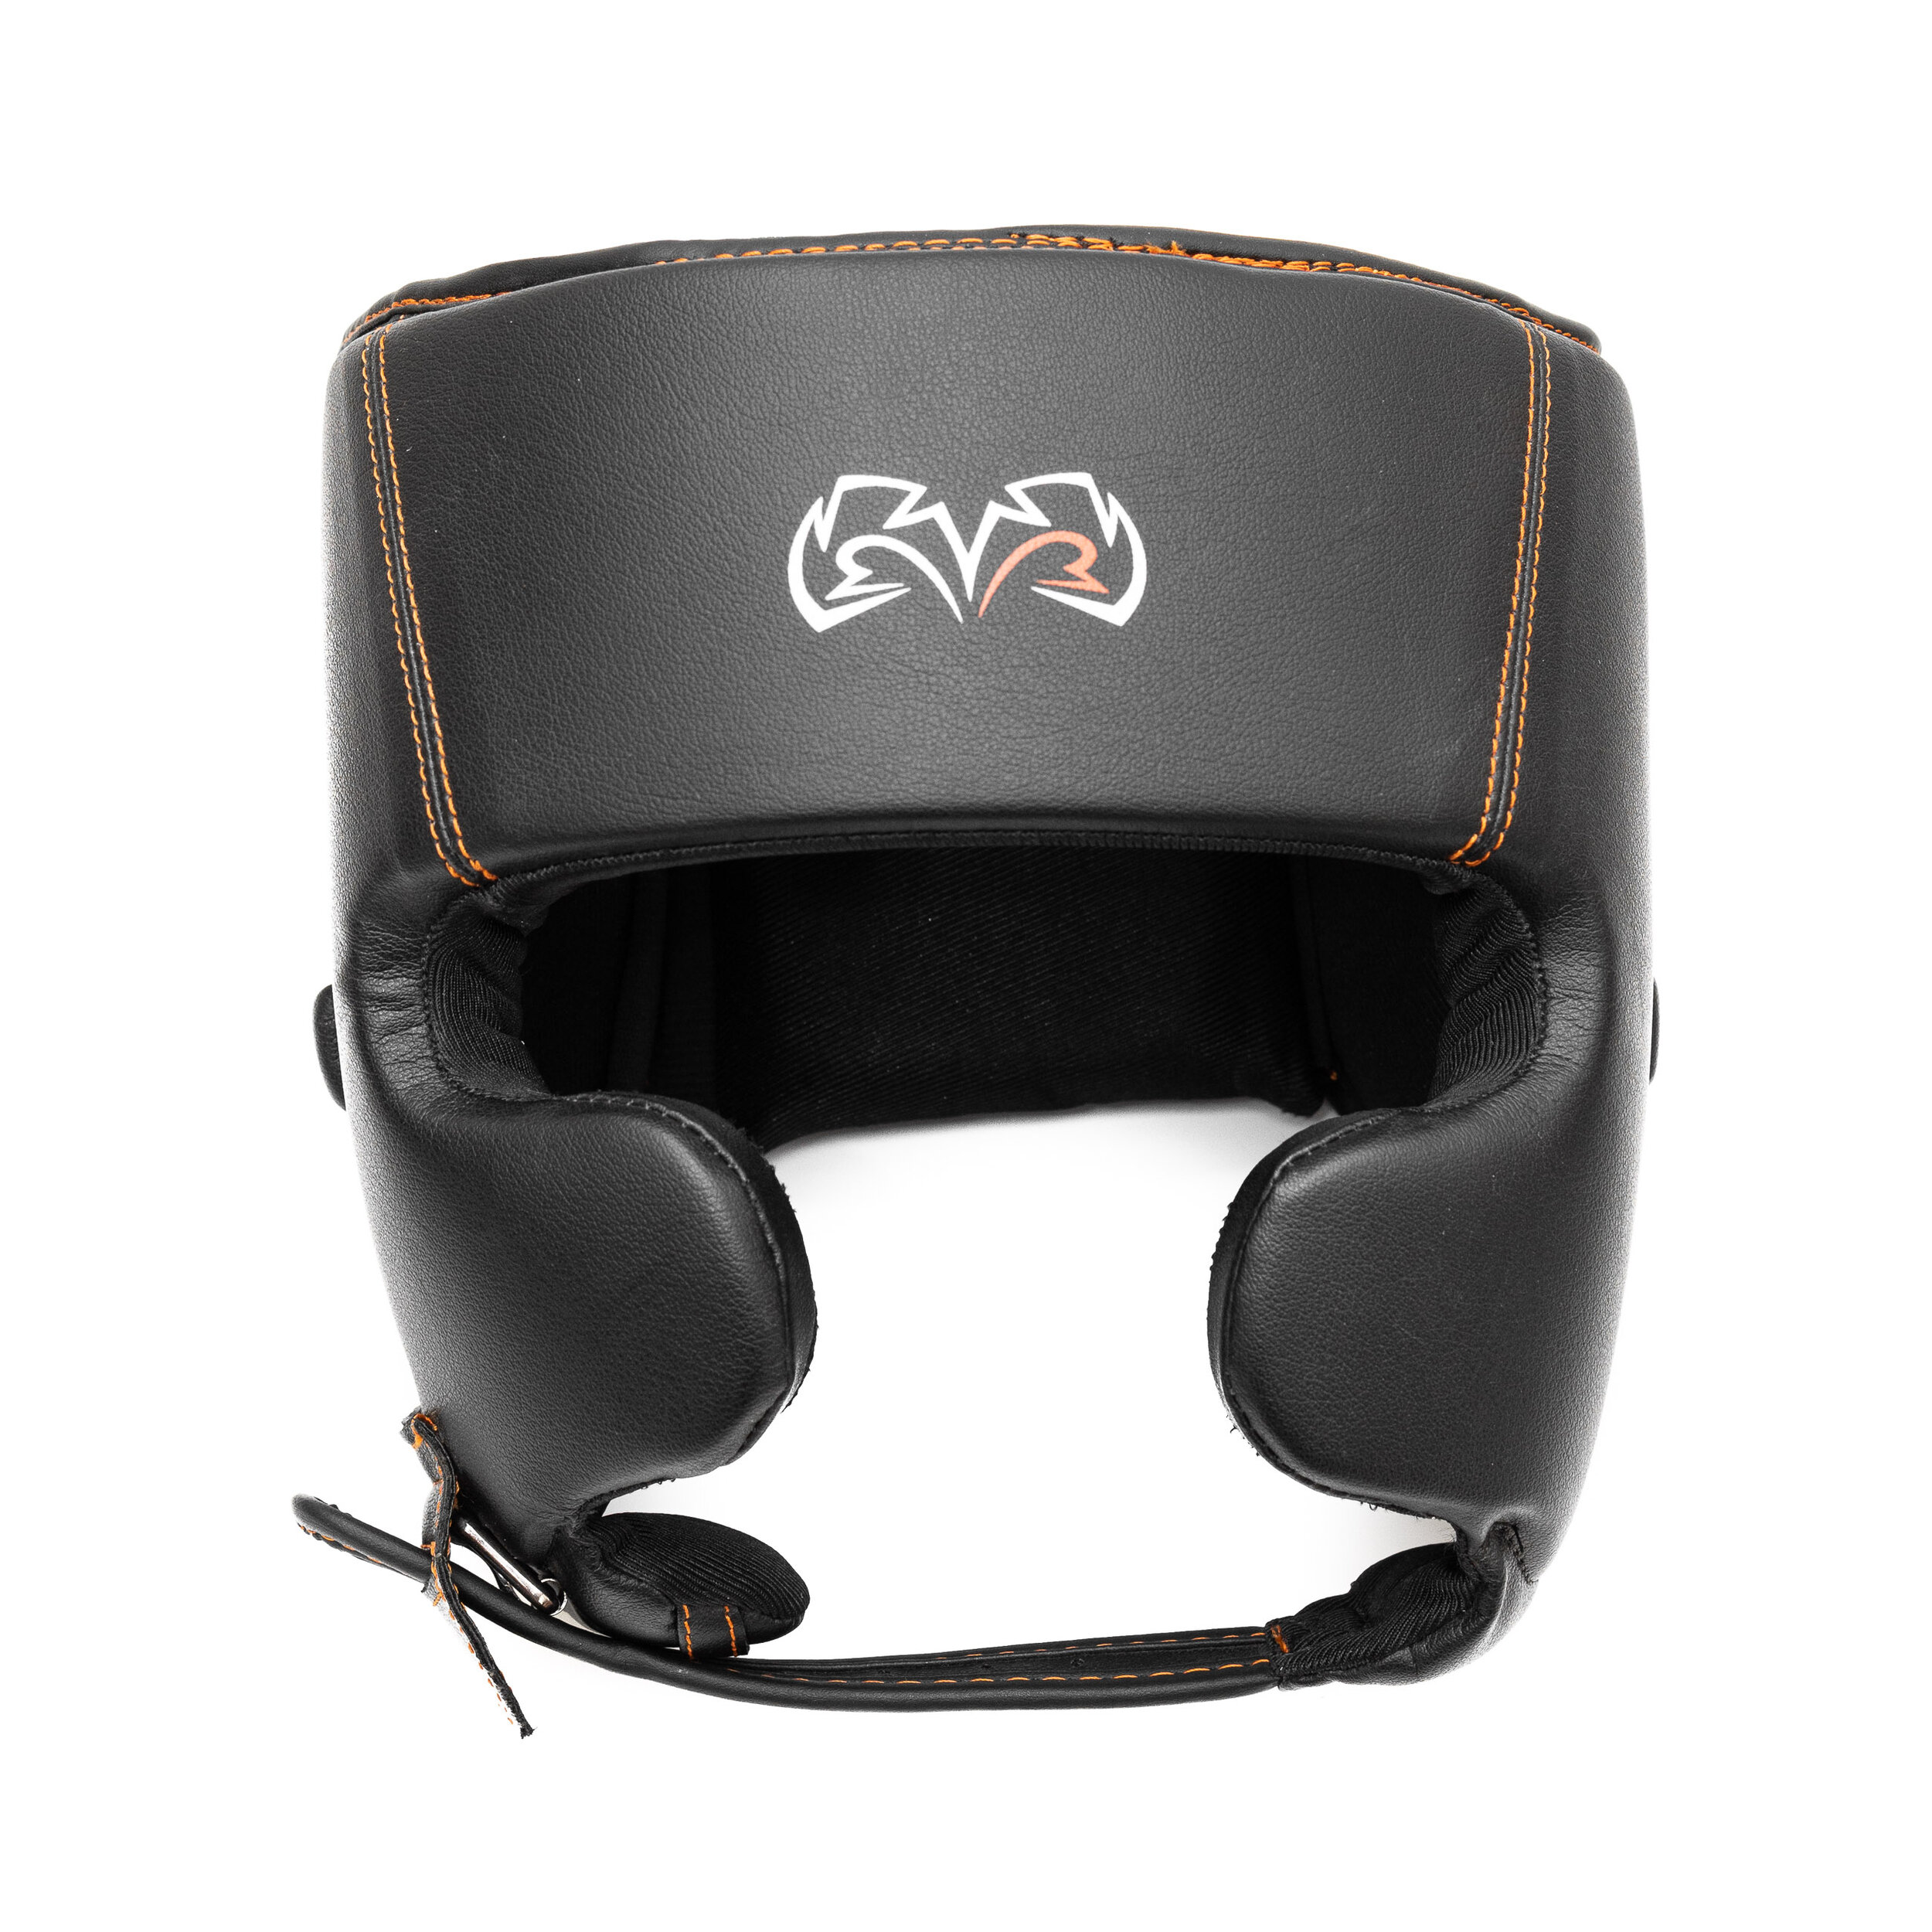 RIVAL Boxing RHG60 Workout Training Headgear Black 